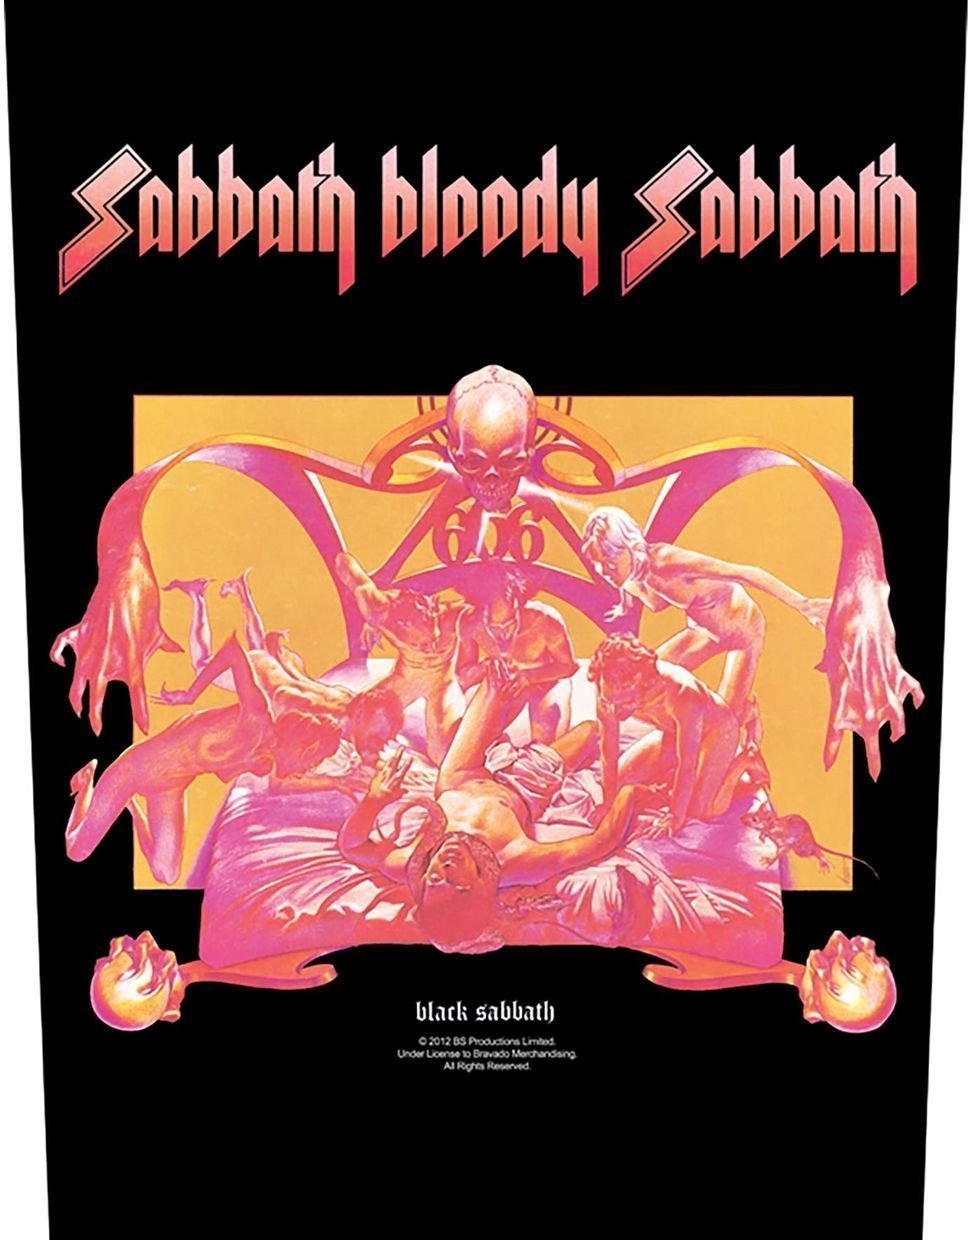 Parche Black Sabbath Sabbath Bloody Sabbath Parche